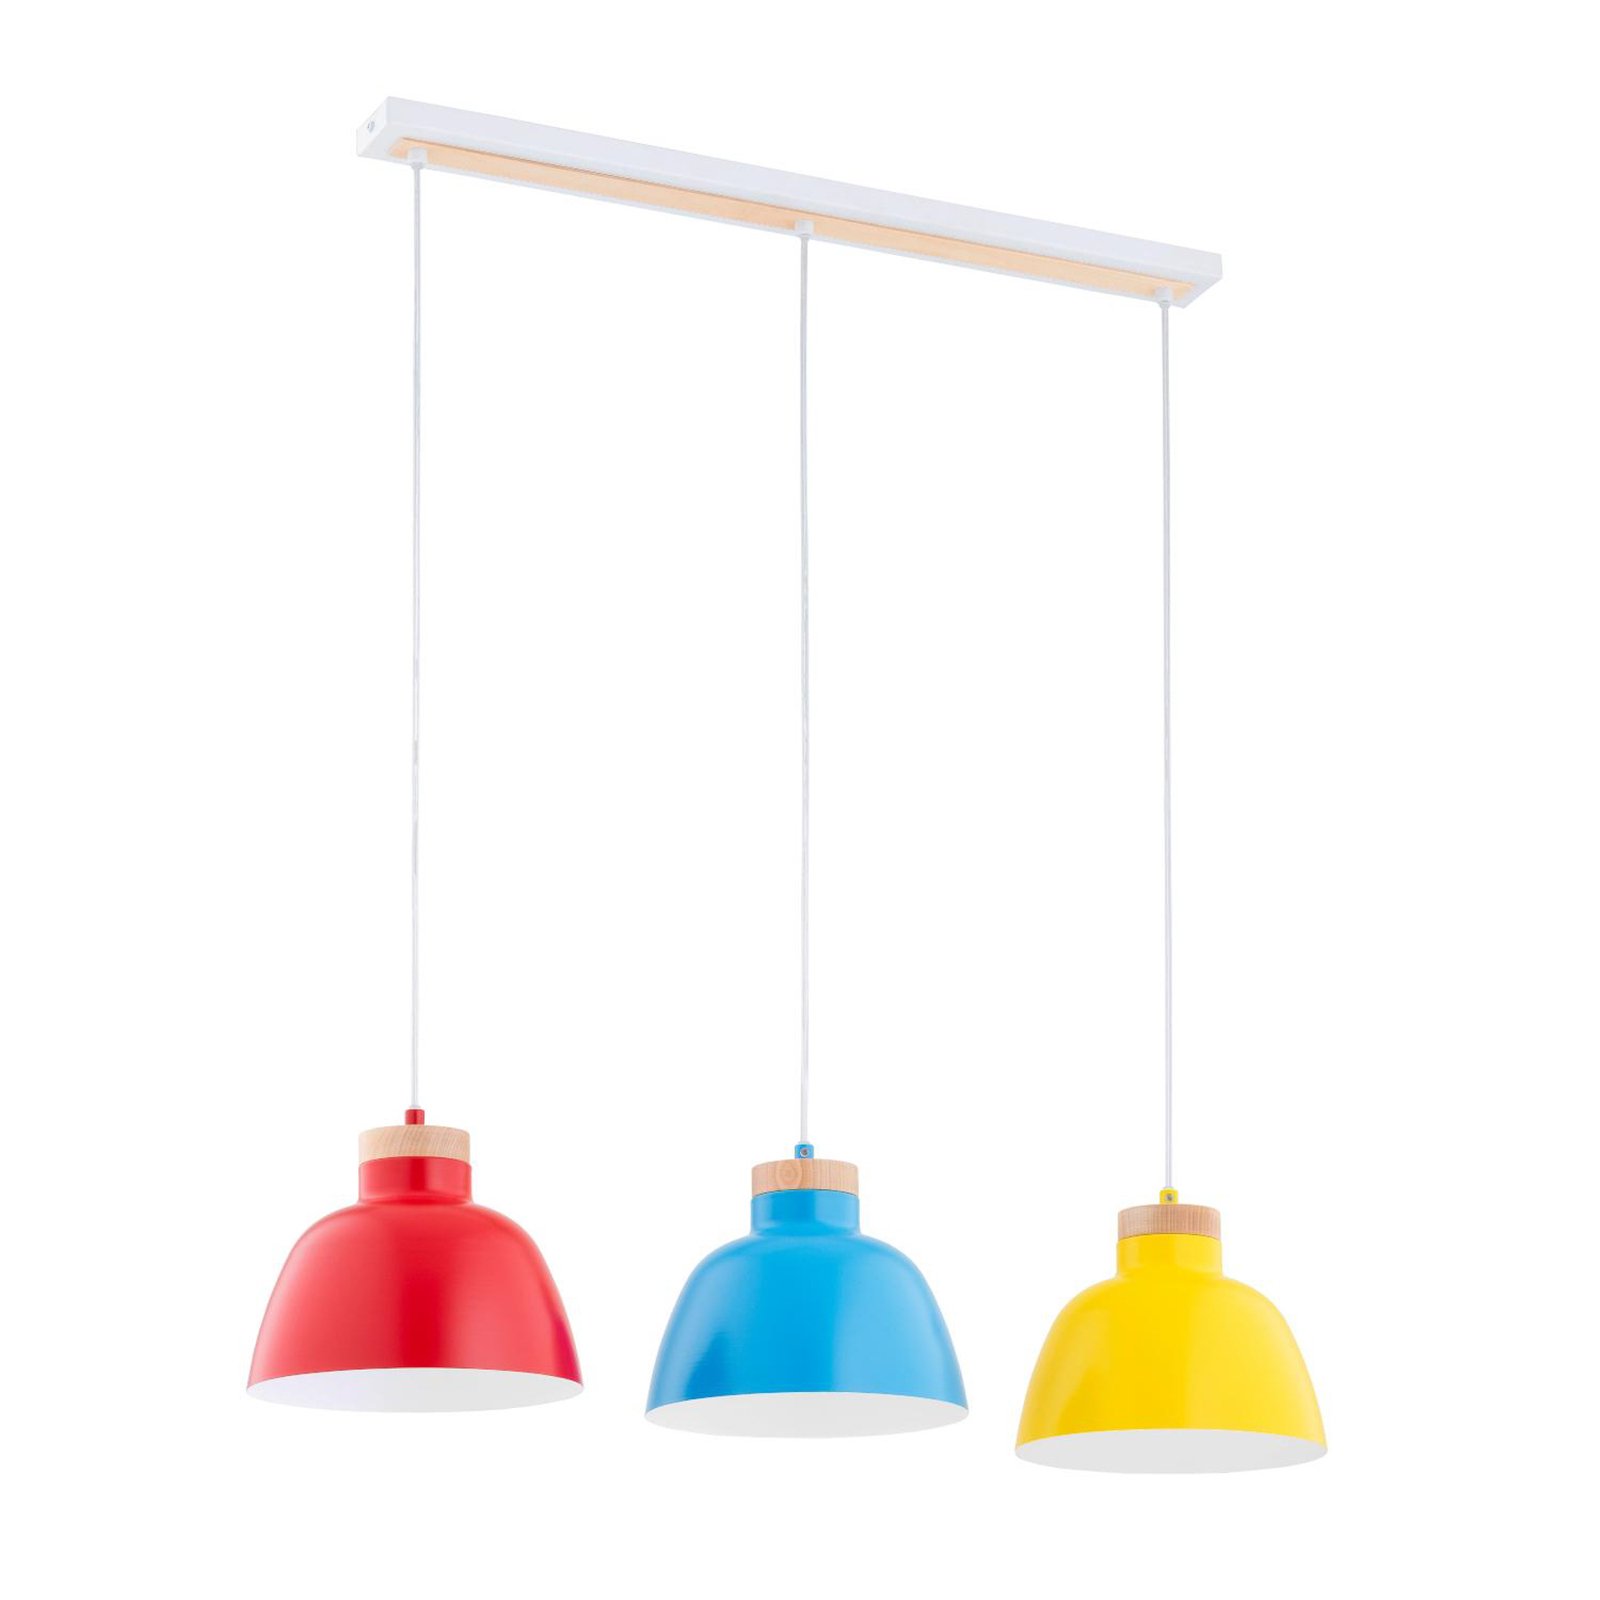 Lorien pendant light, colourful, 3-bulb, metal, wood